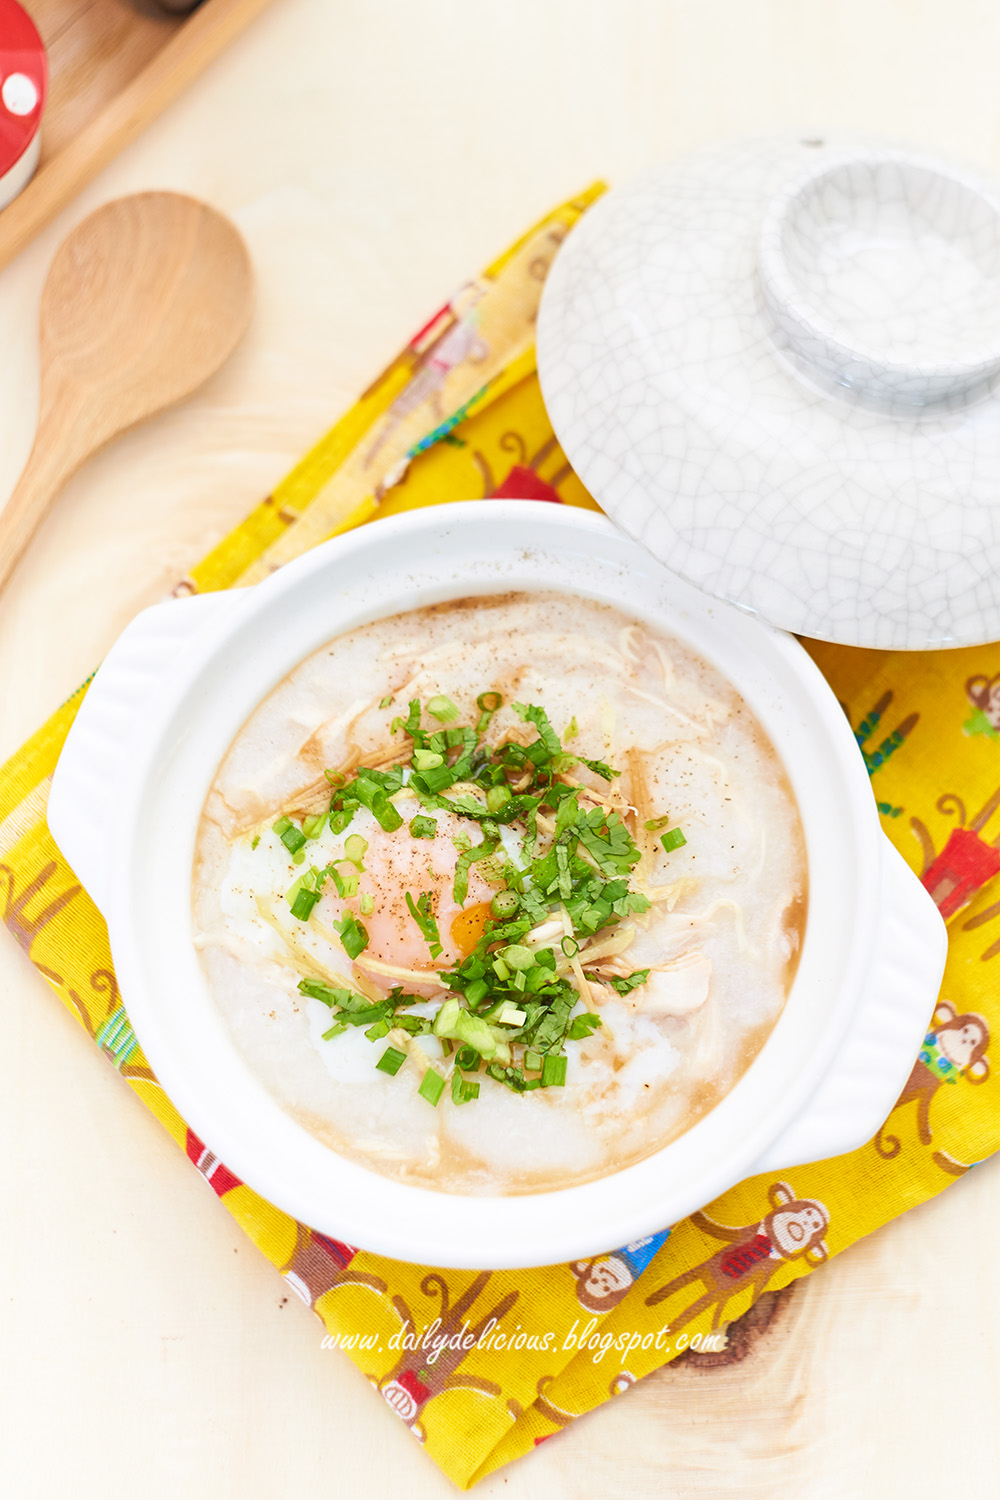 dailydelicious: Jasmine rice Congee with chicken